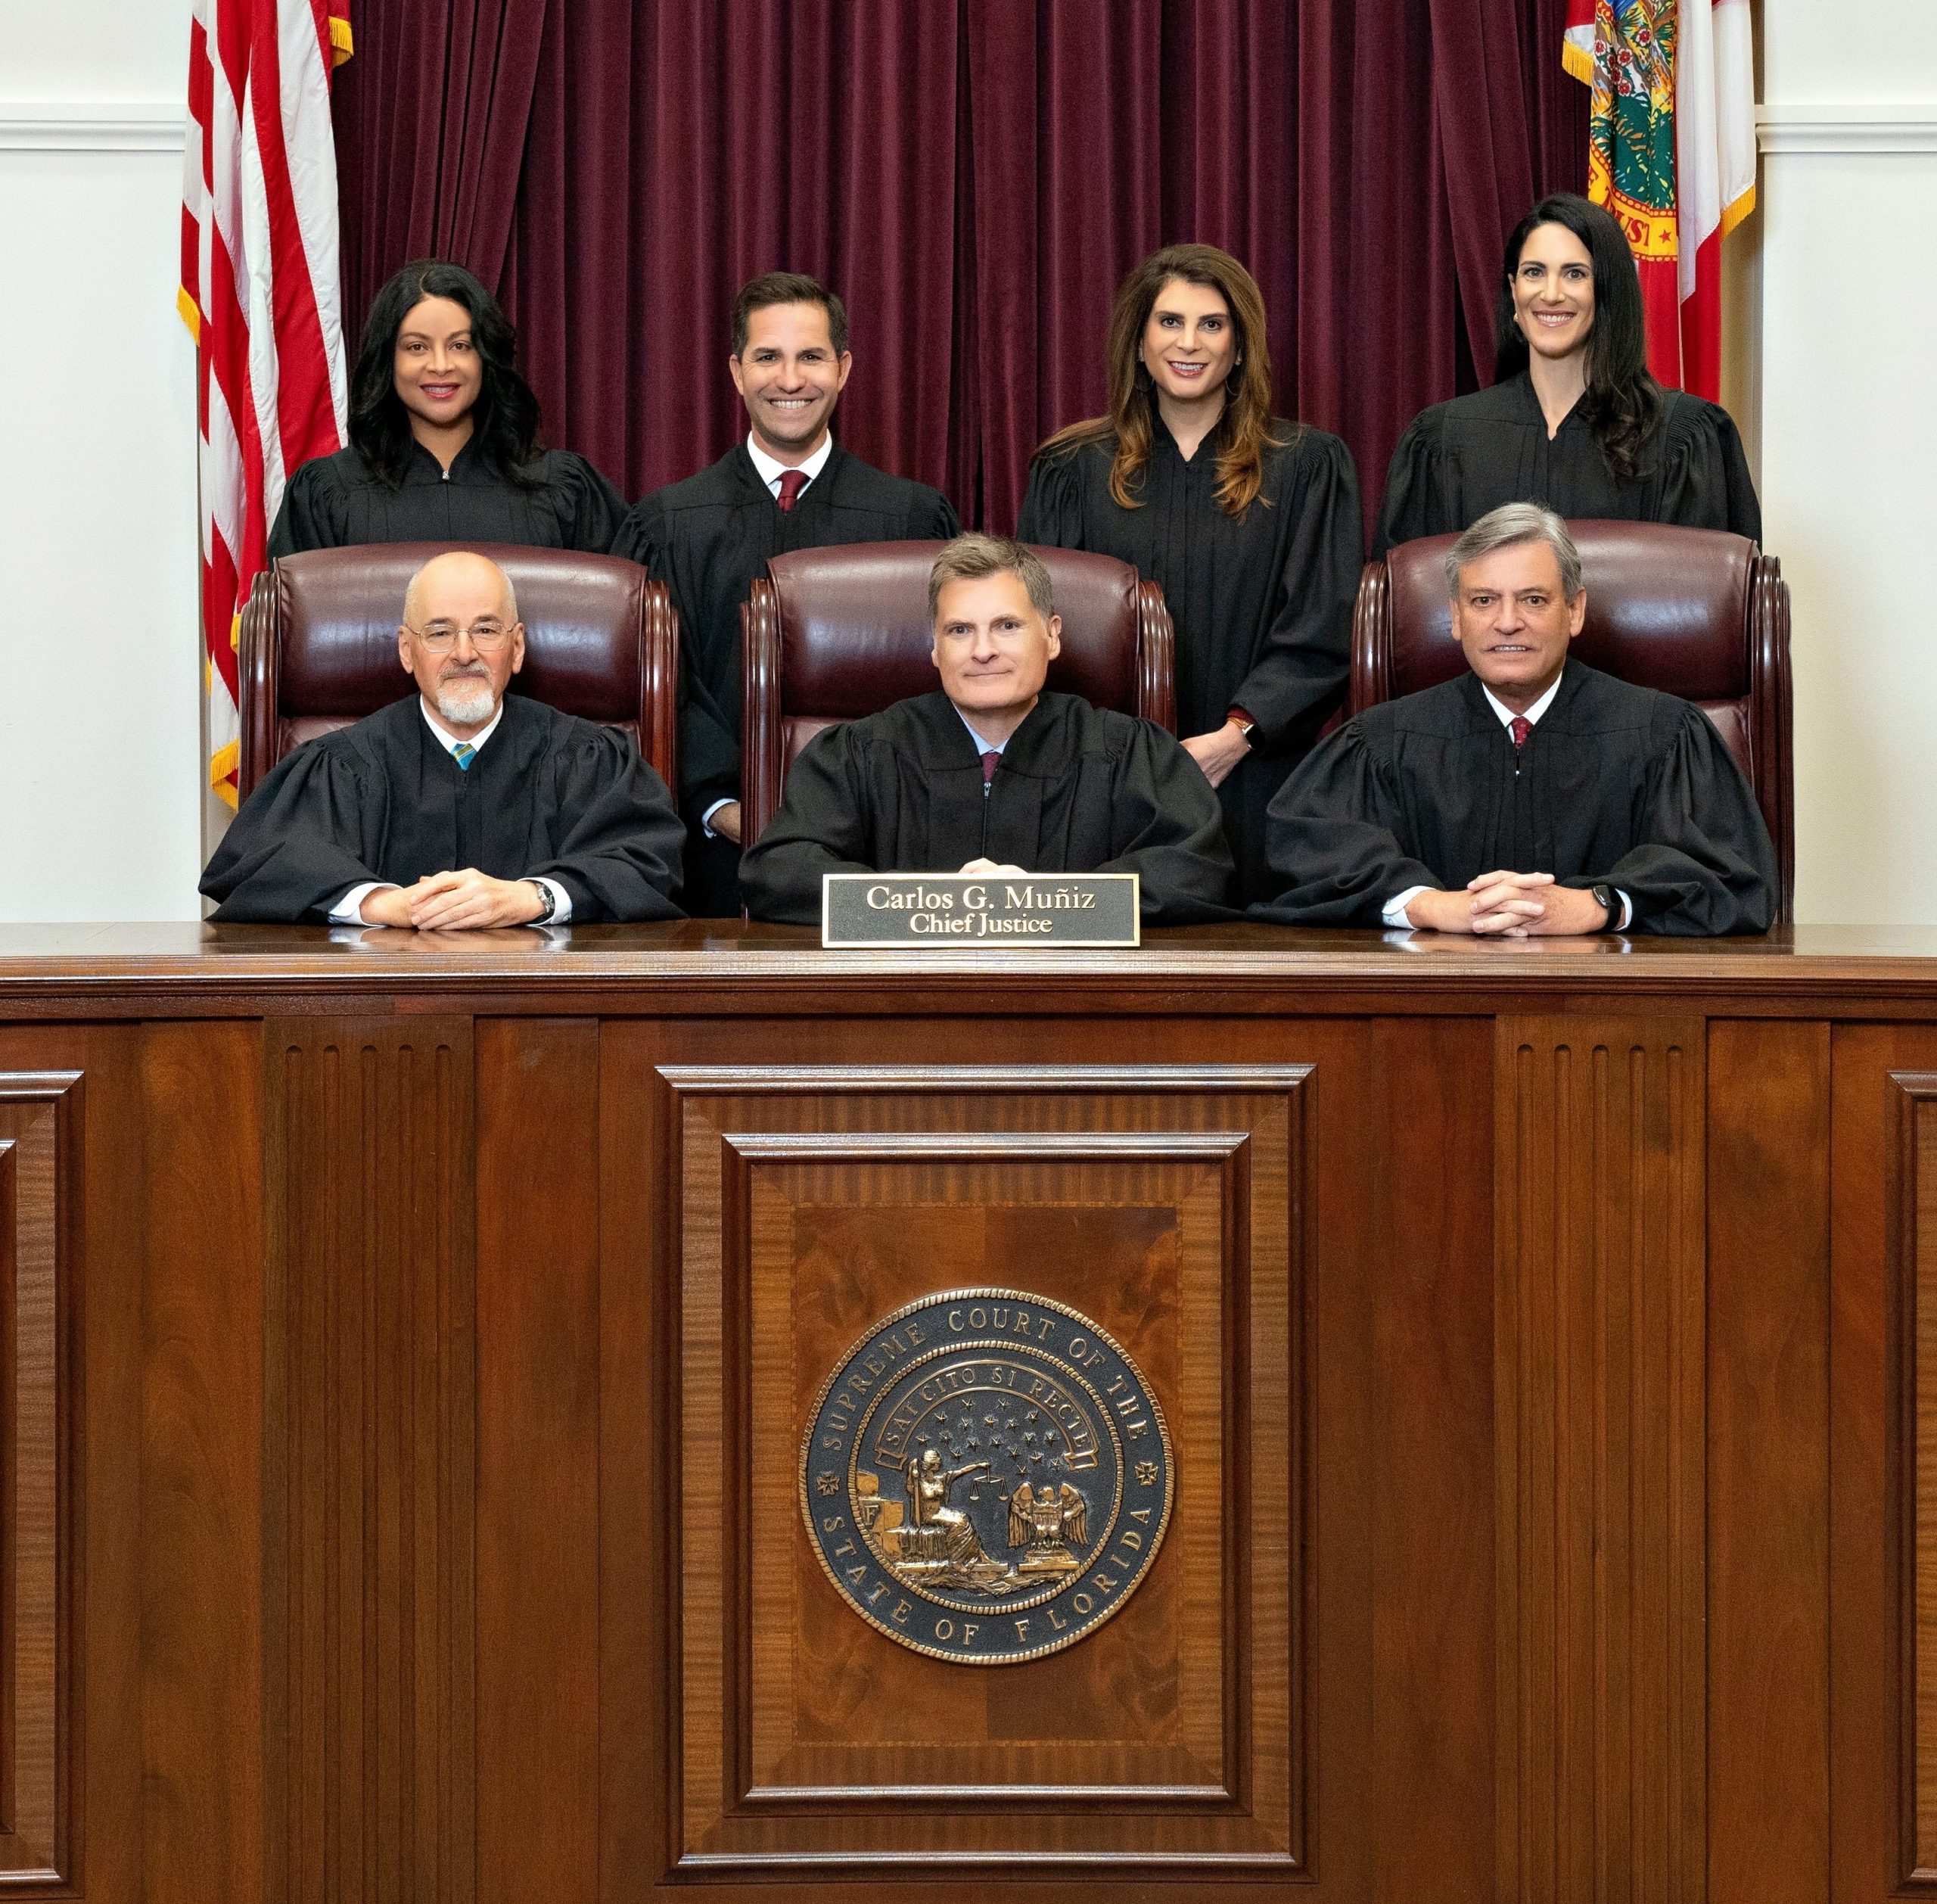 The seven judges of Florida's Supreme Court Justice